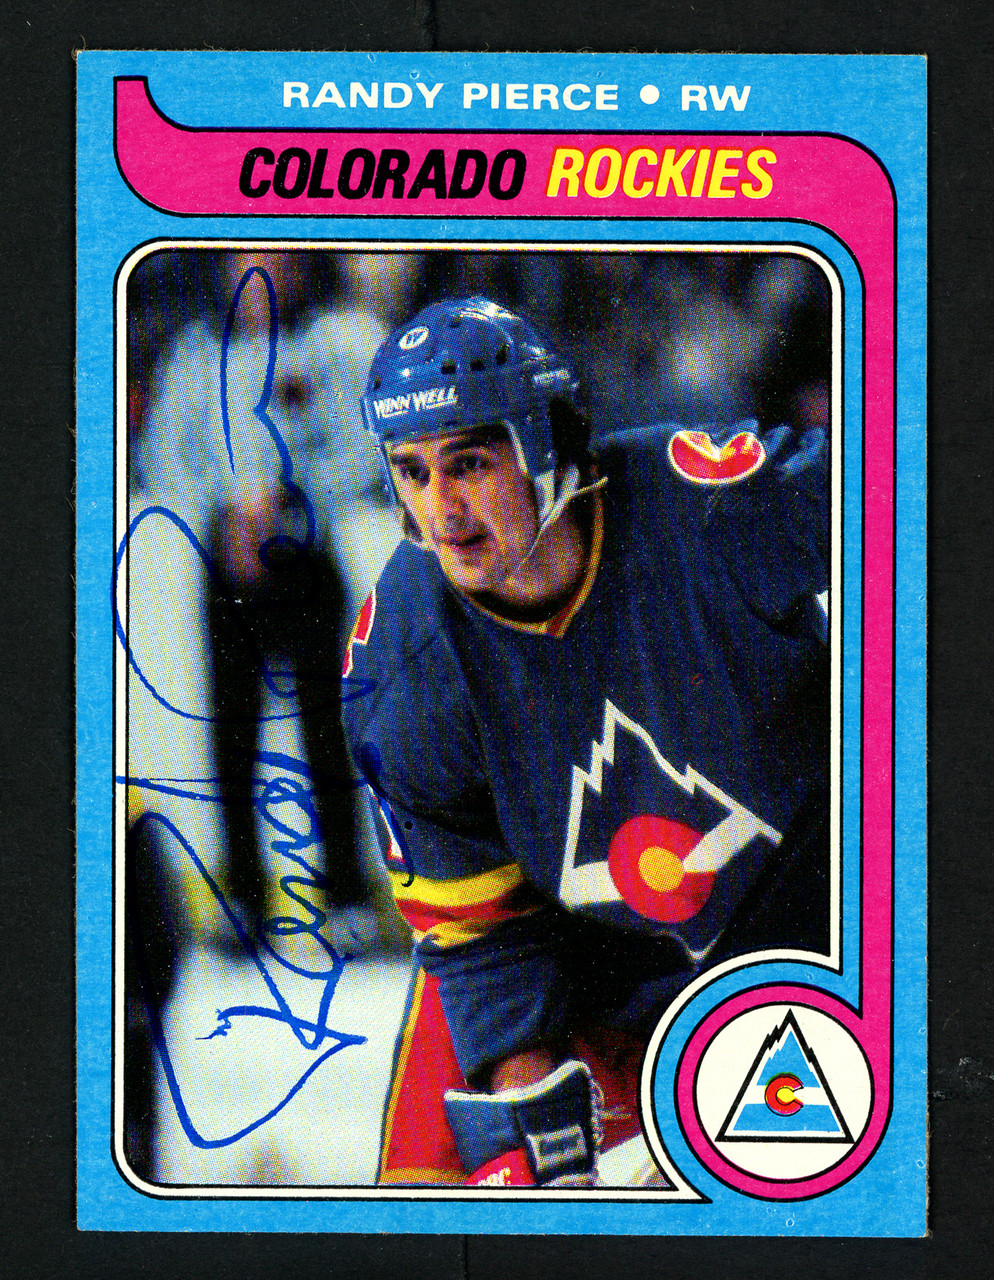 Randy Pierce Autographed 1979-80 Topps Rookie Card #137 Colorado